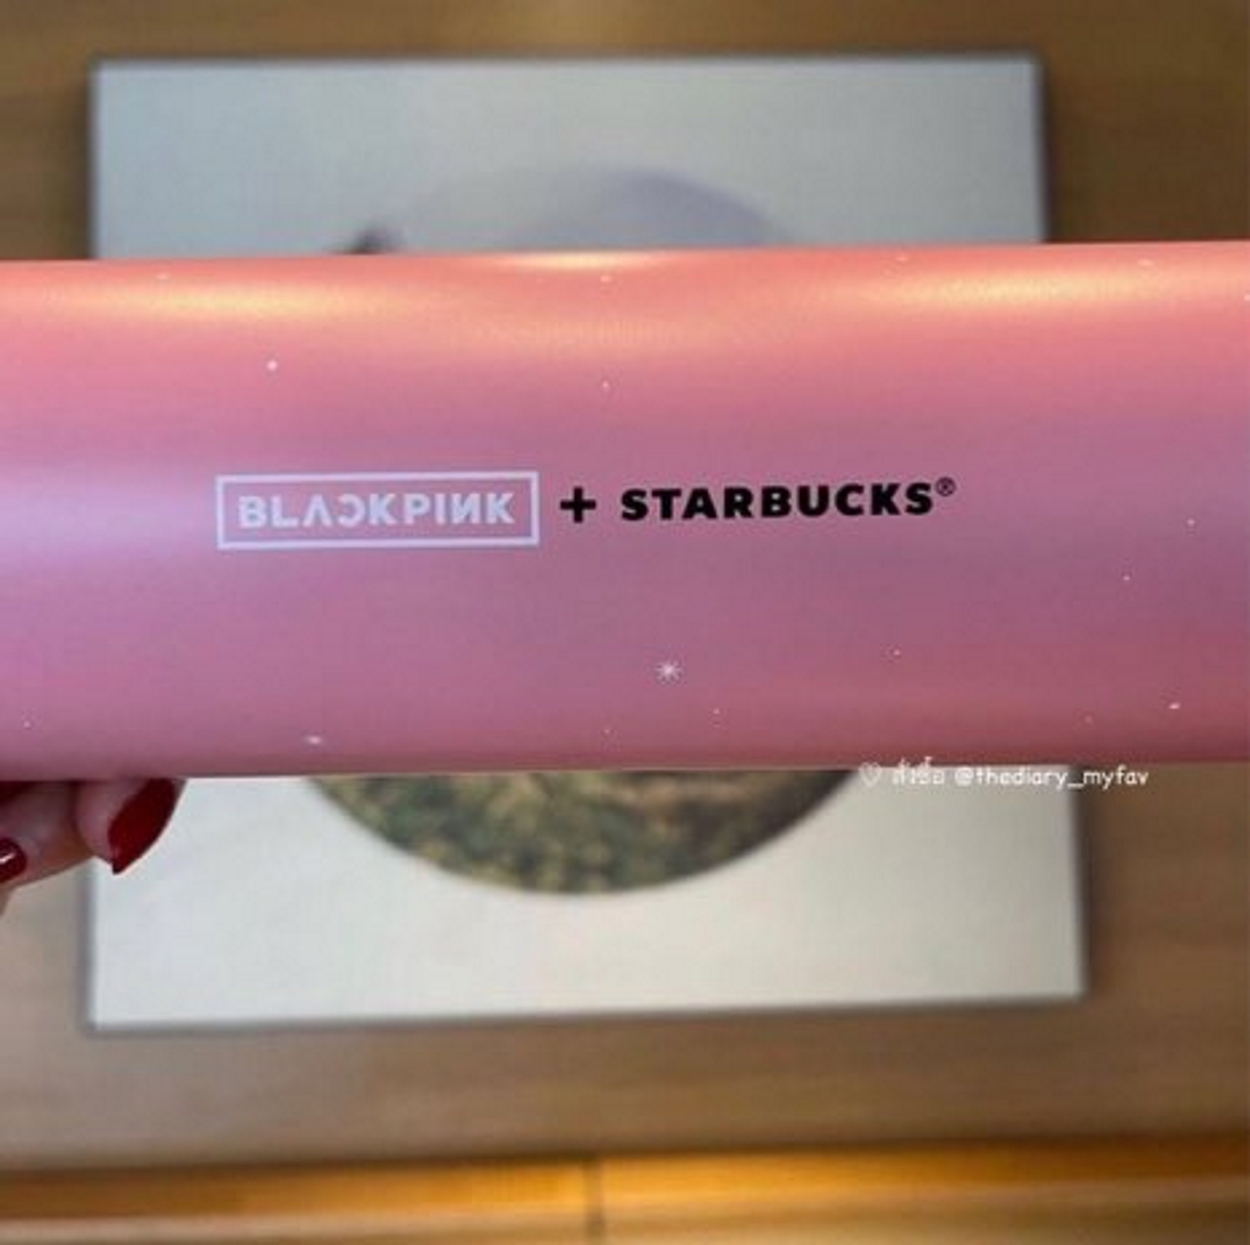 Les produits BLACKPINK de Starbucks Asia Pacific Cooperation sont super